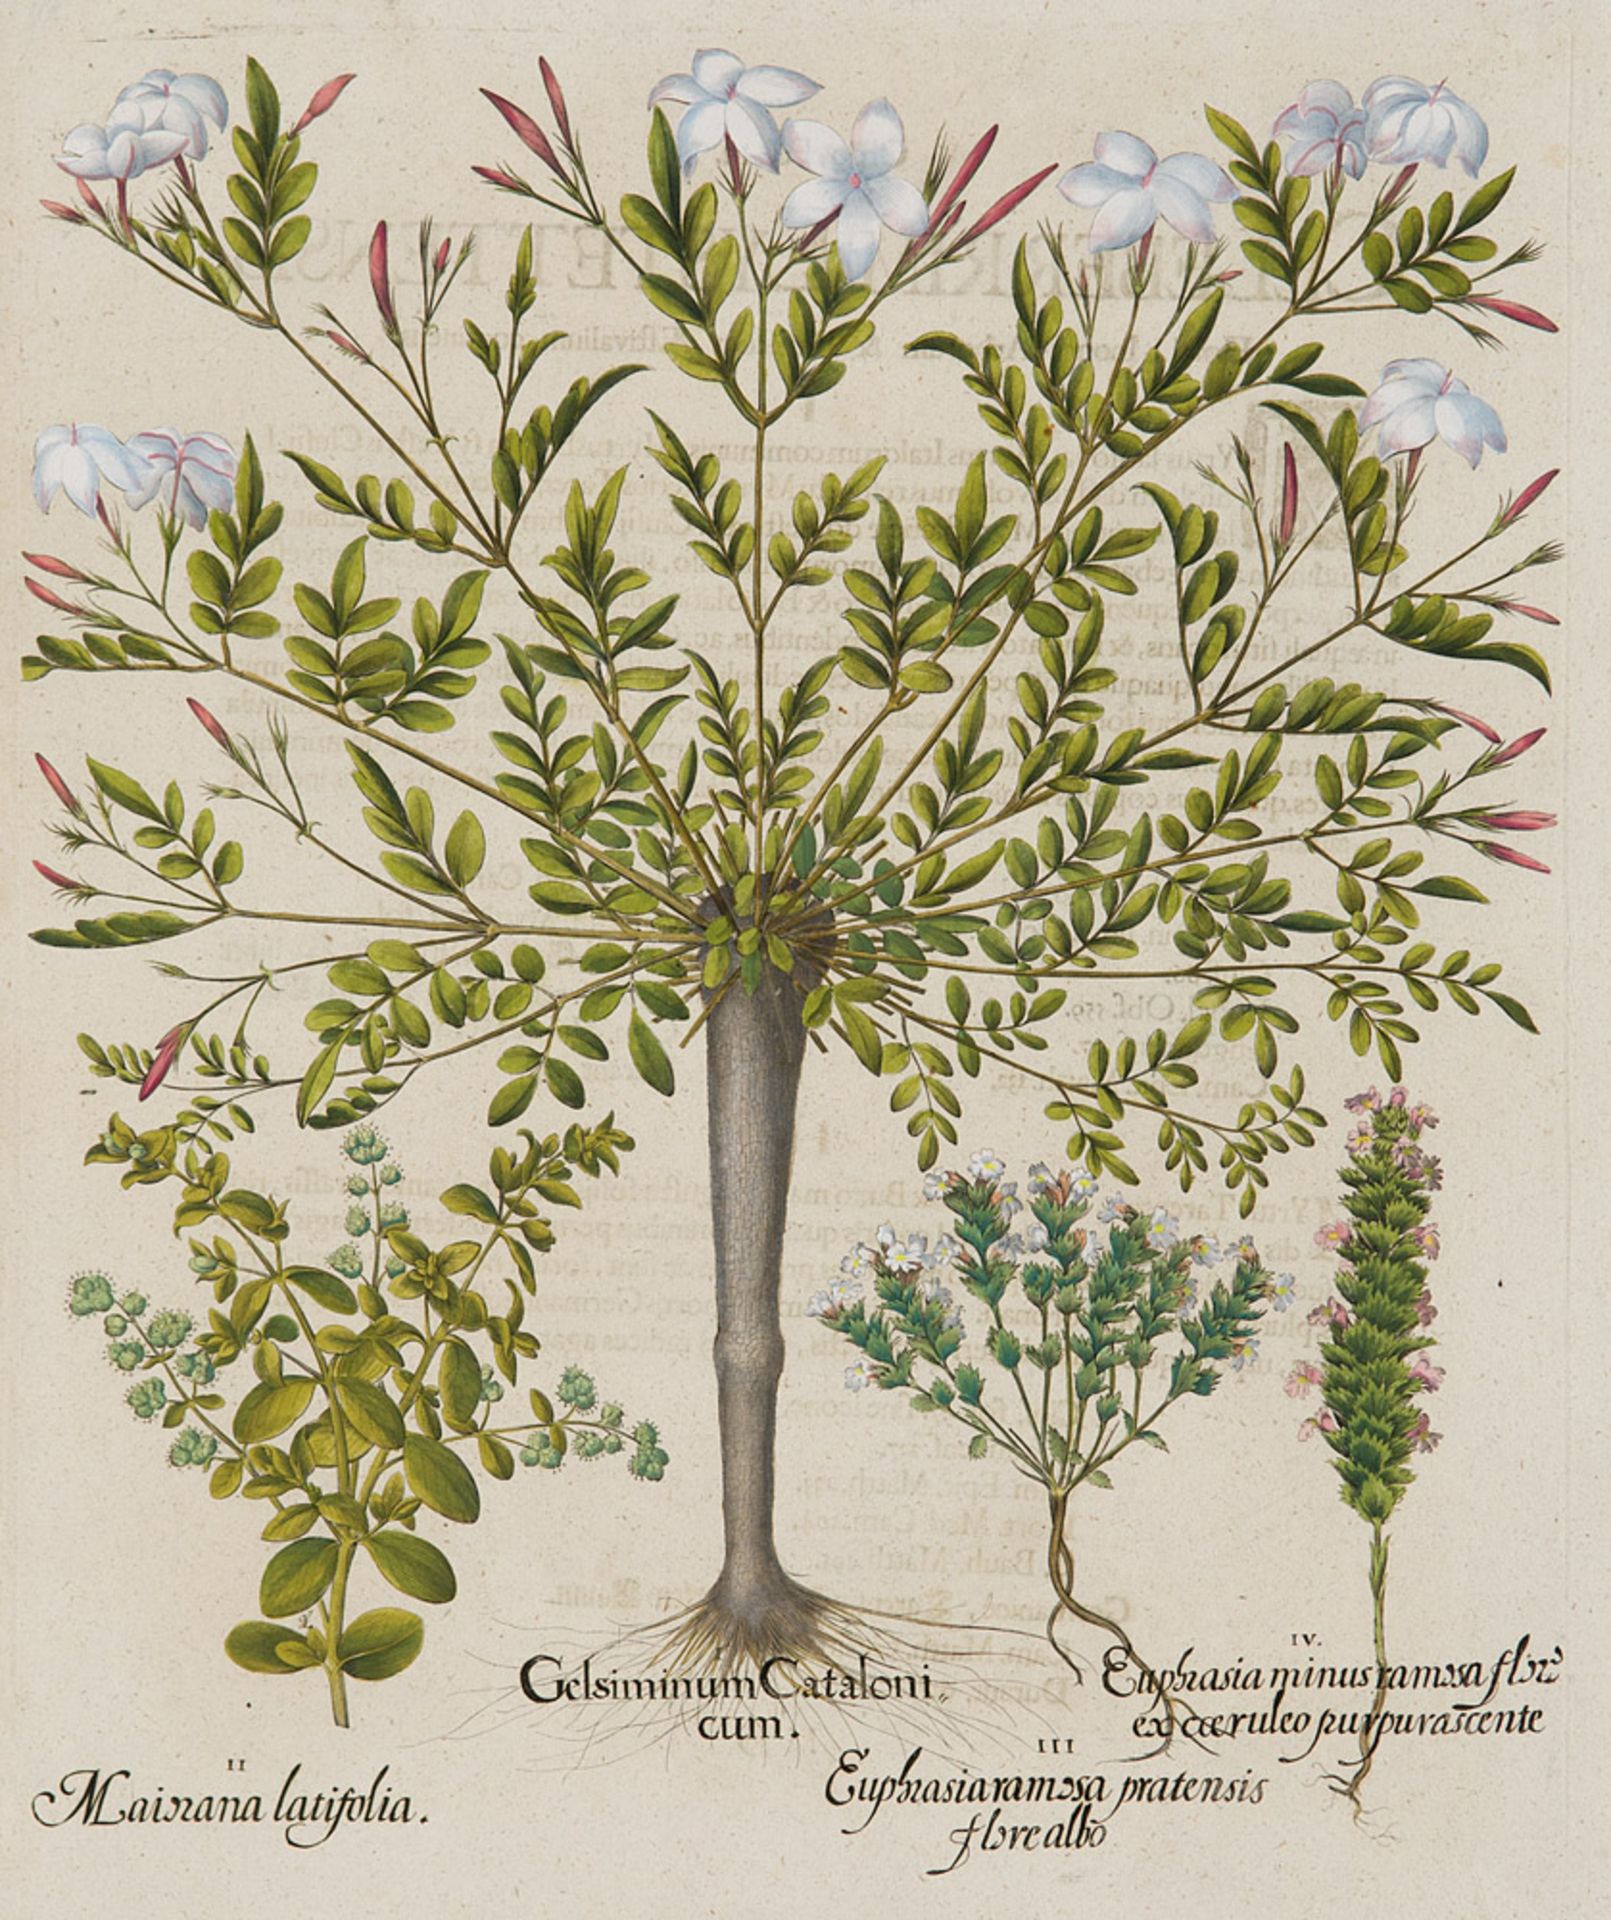 Basilius Besler. I. Gelsiminum Cataloni cum. II. Mainana latifolia. III. Euphasia ramsa prat